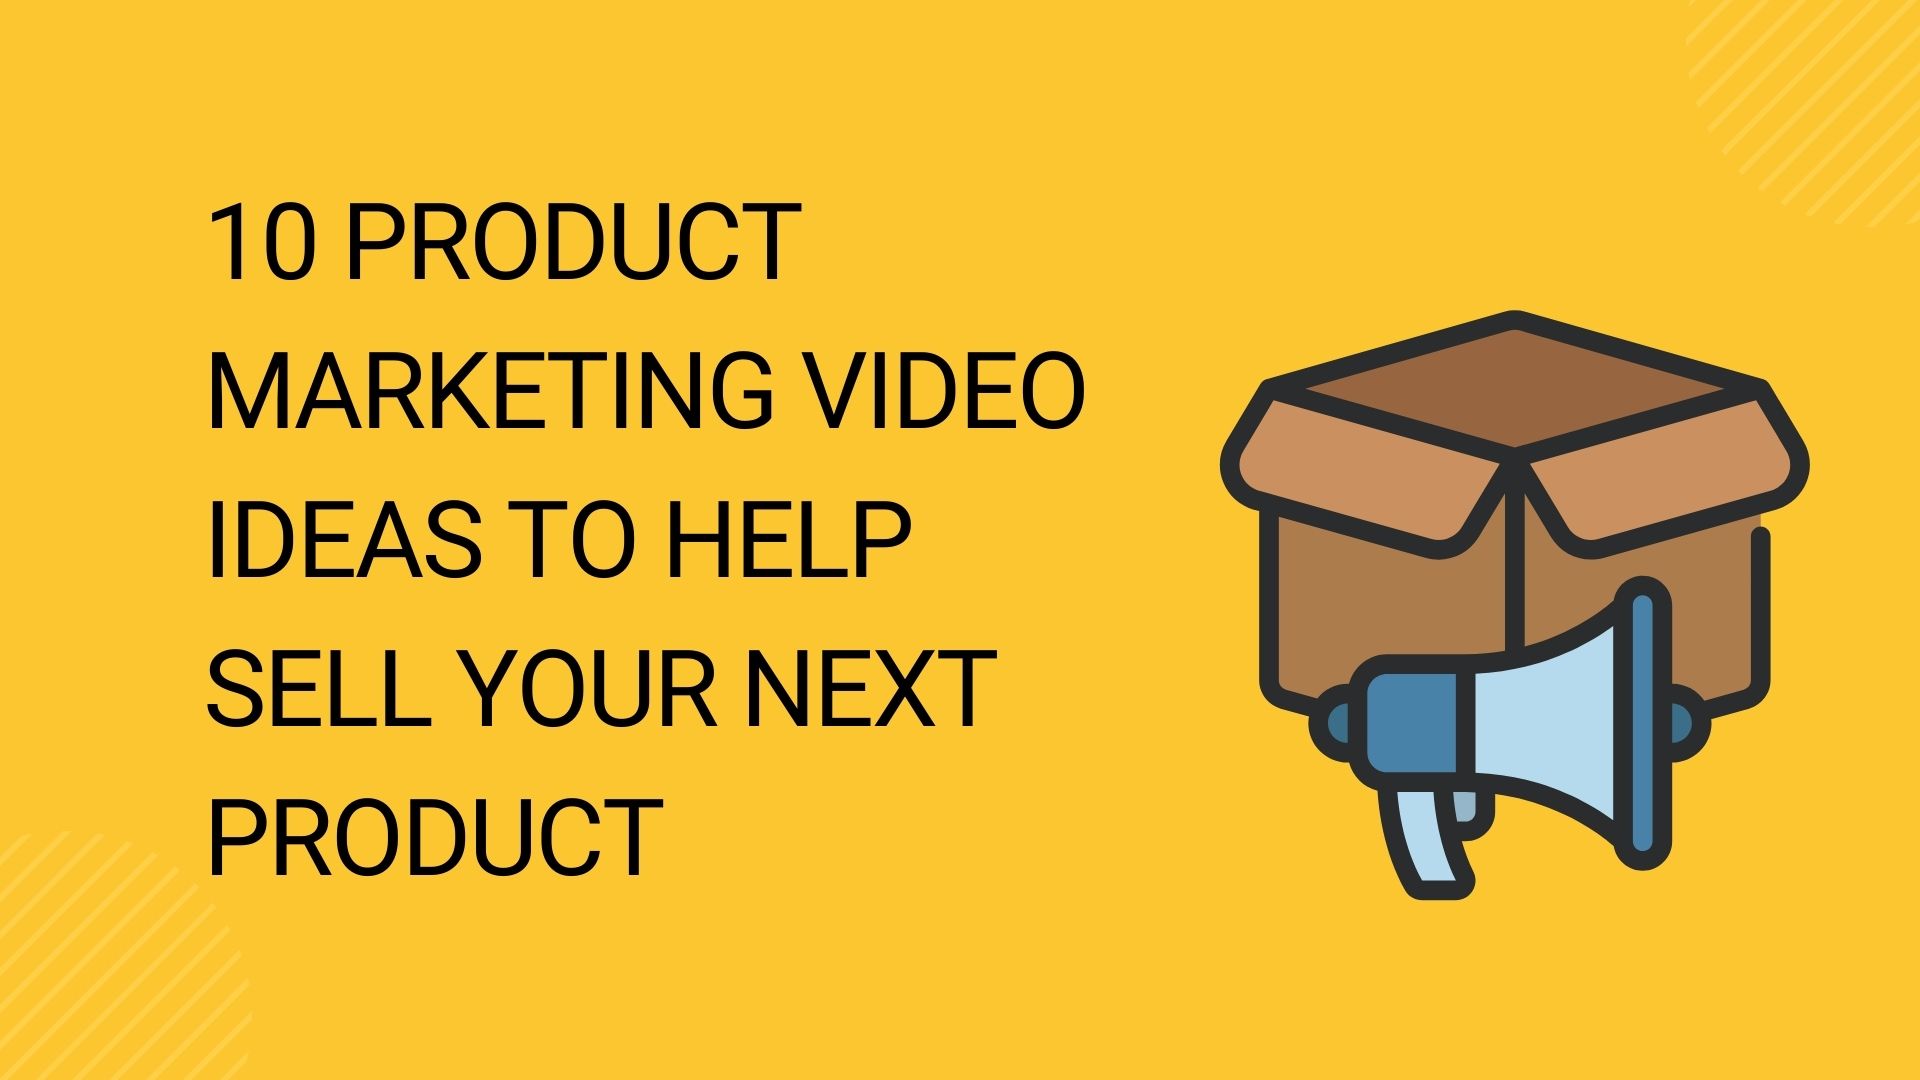 Product Marketing Video Ideas